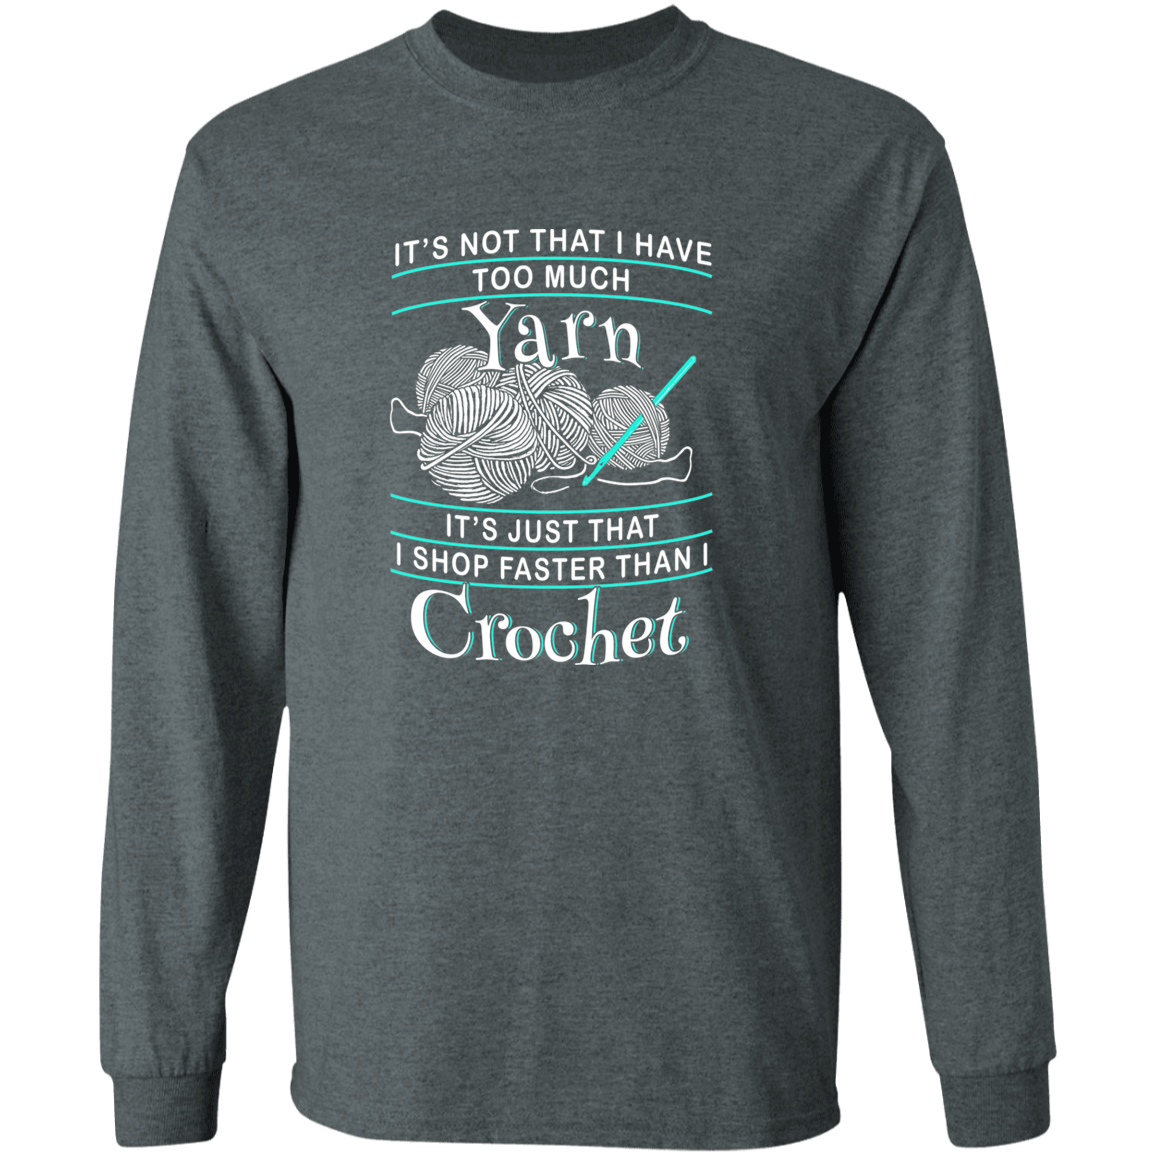 I Shop Faster than I Crochet Long Sleeve T-Shirt